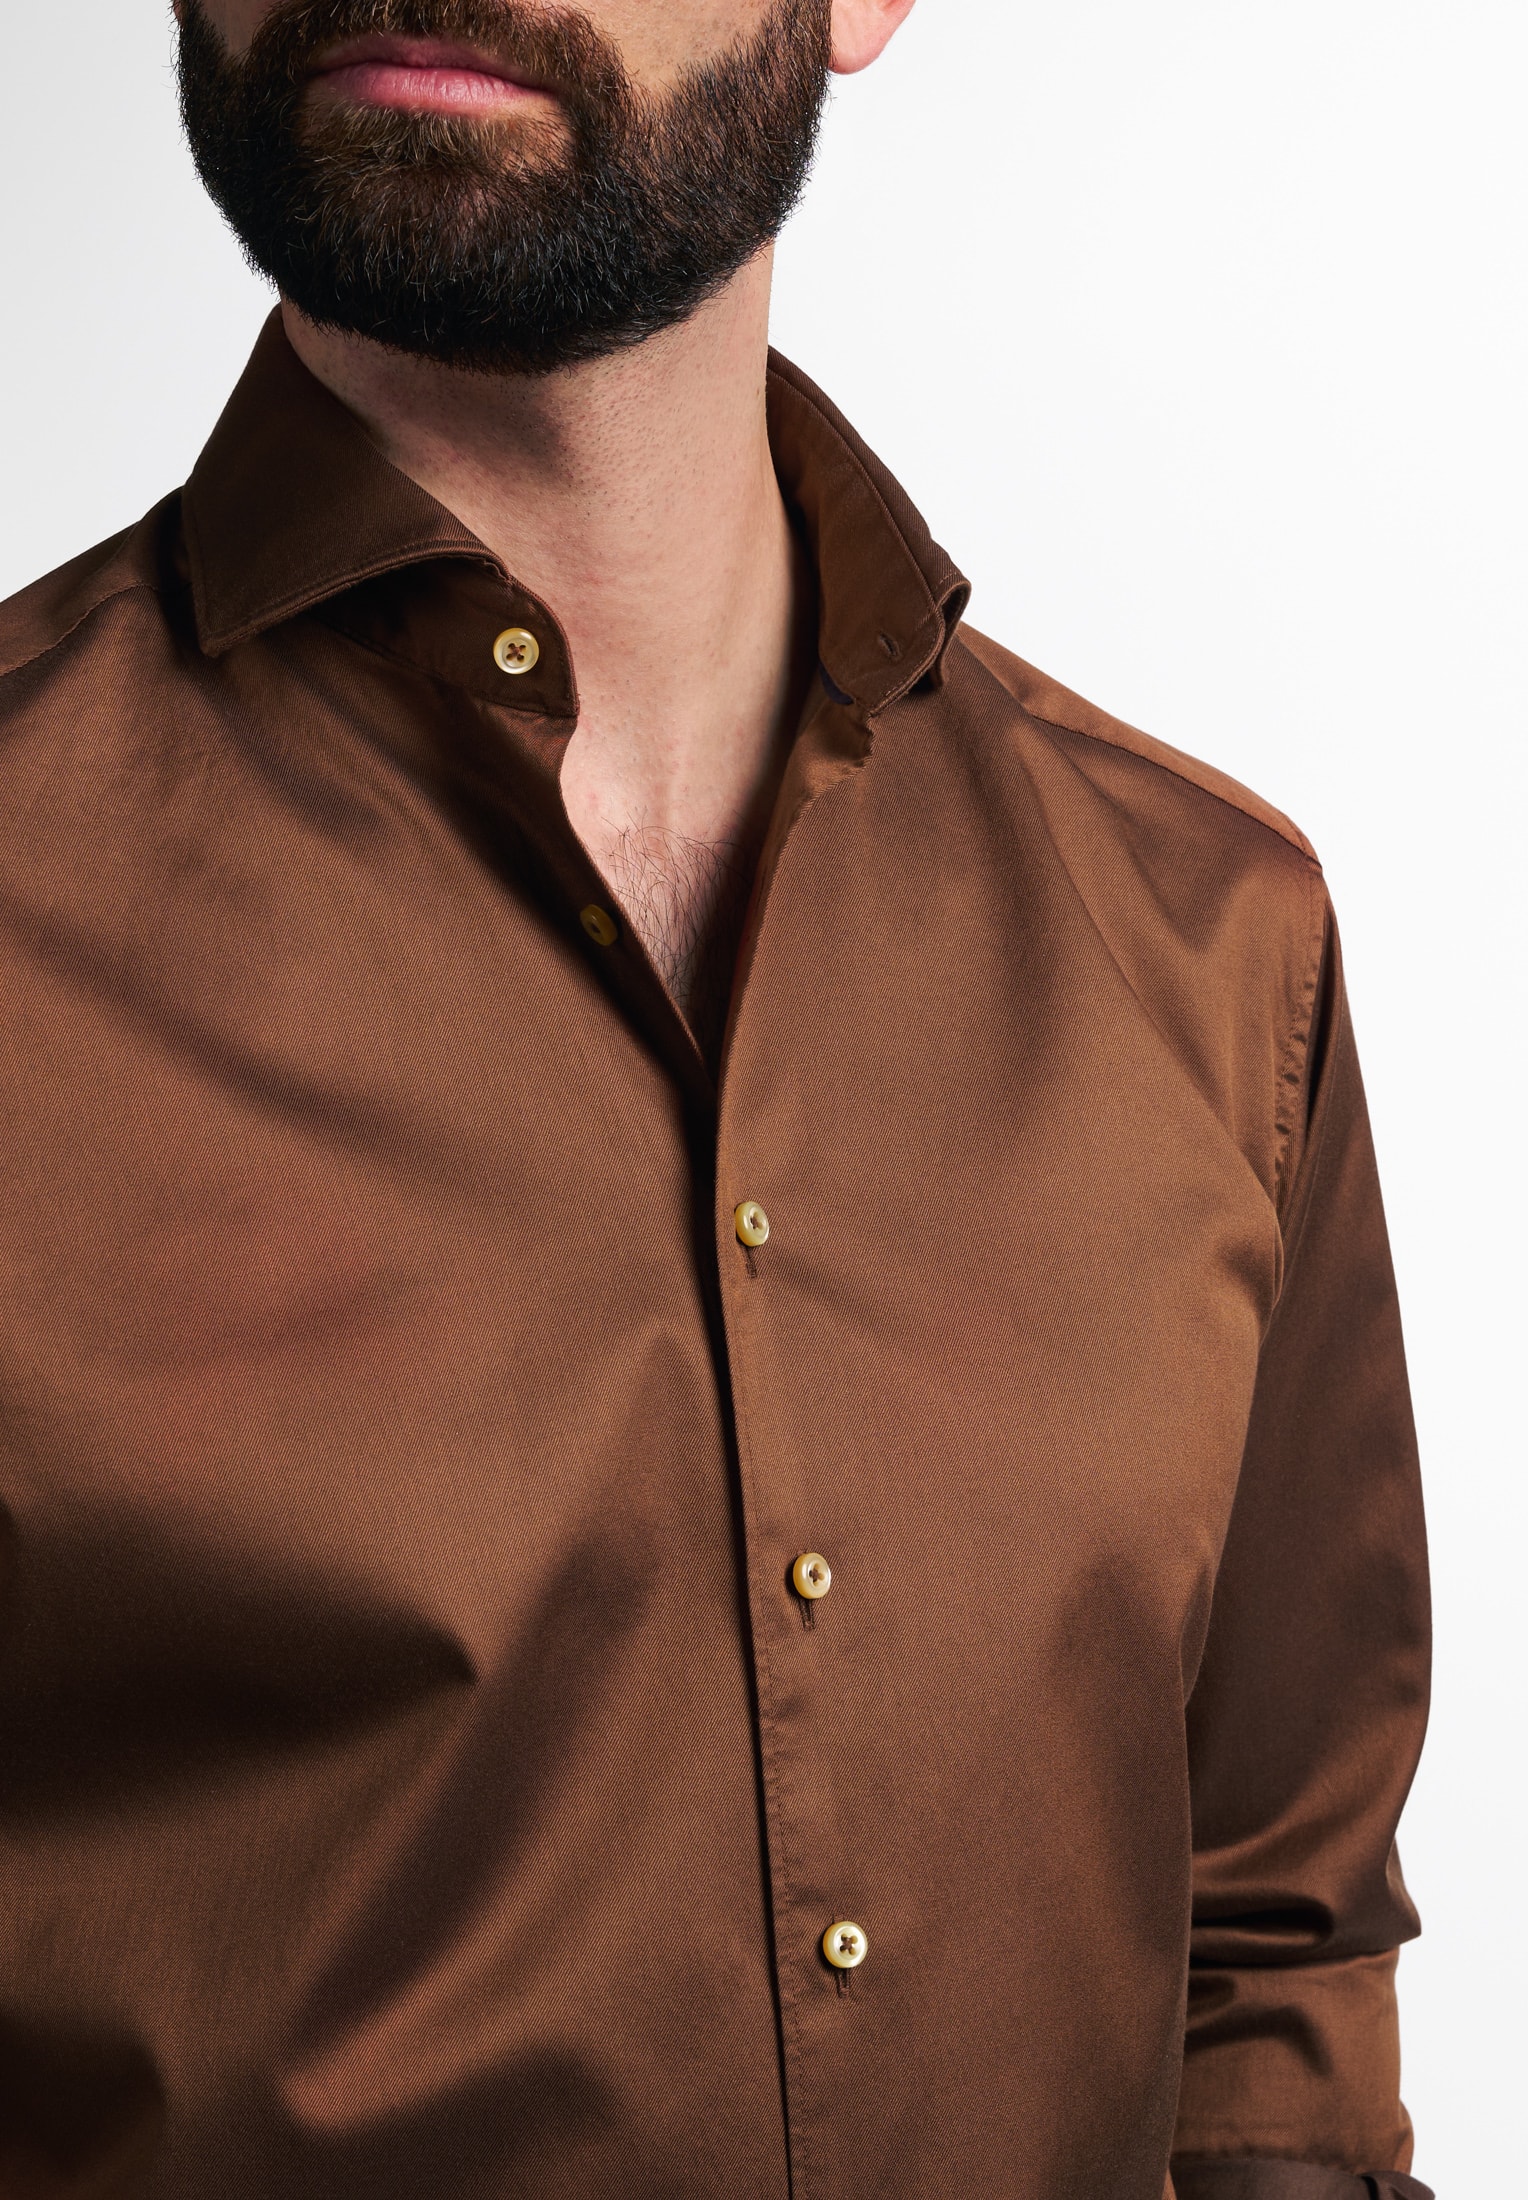 Shirt caramell Langarm Luxury unifarben MODERN | FIT 1SH03488-02-76-45-1/1 45 | | Soft in | caramell